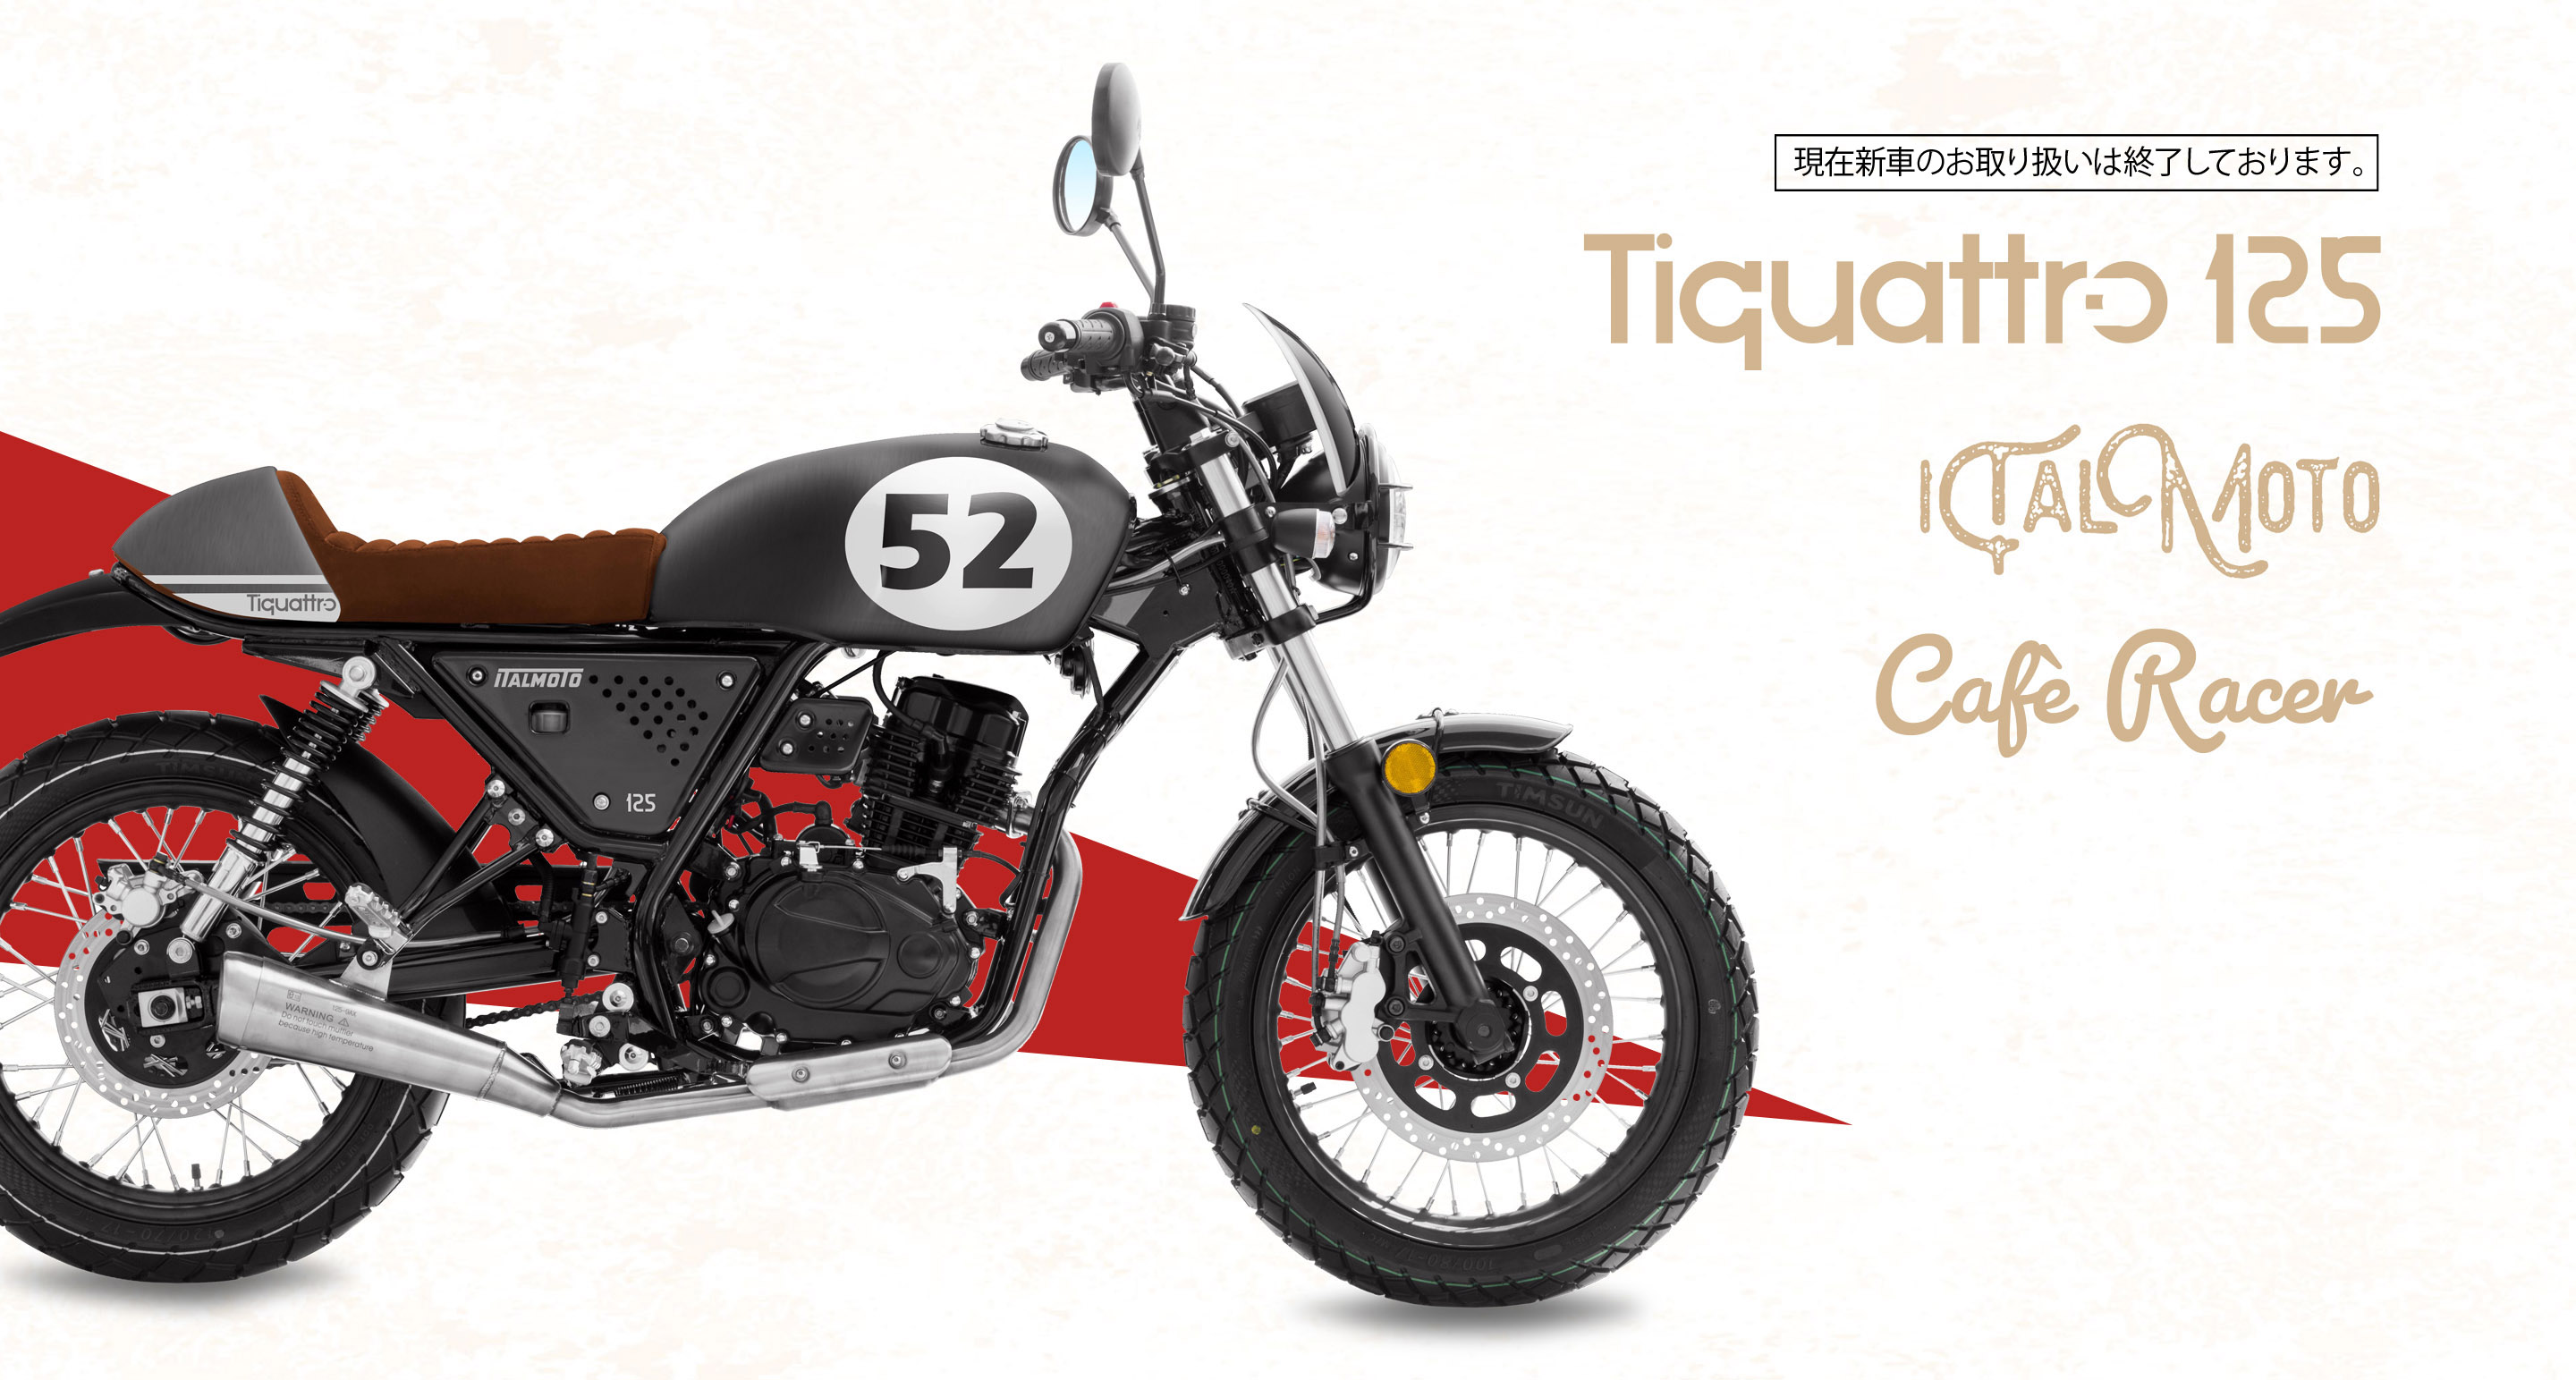 Tiquattro 125cc Cafe Racer 